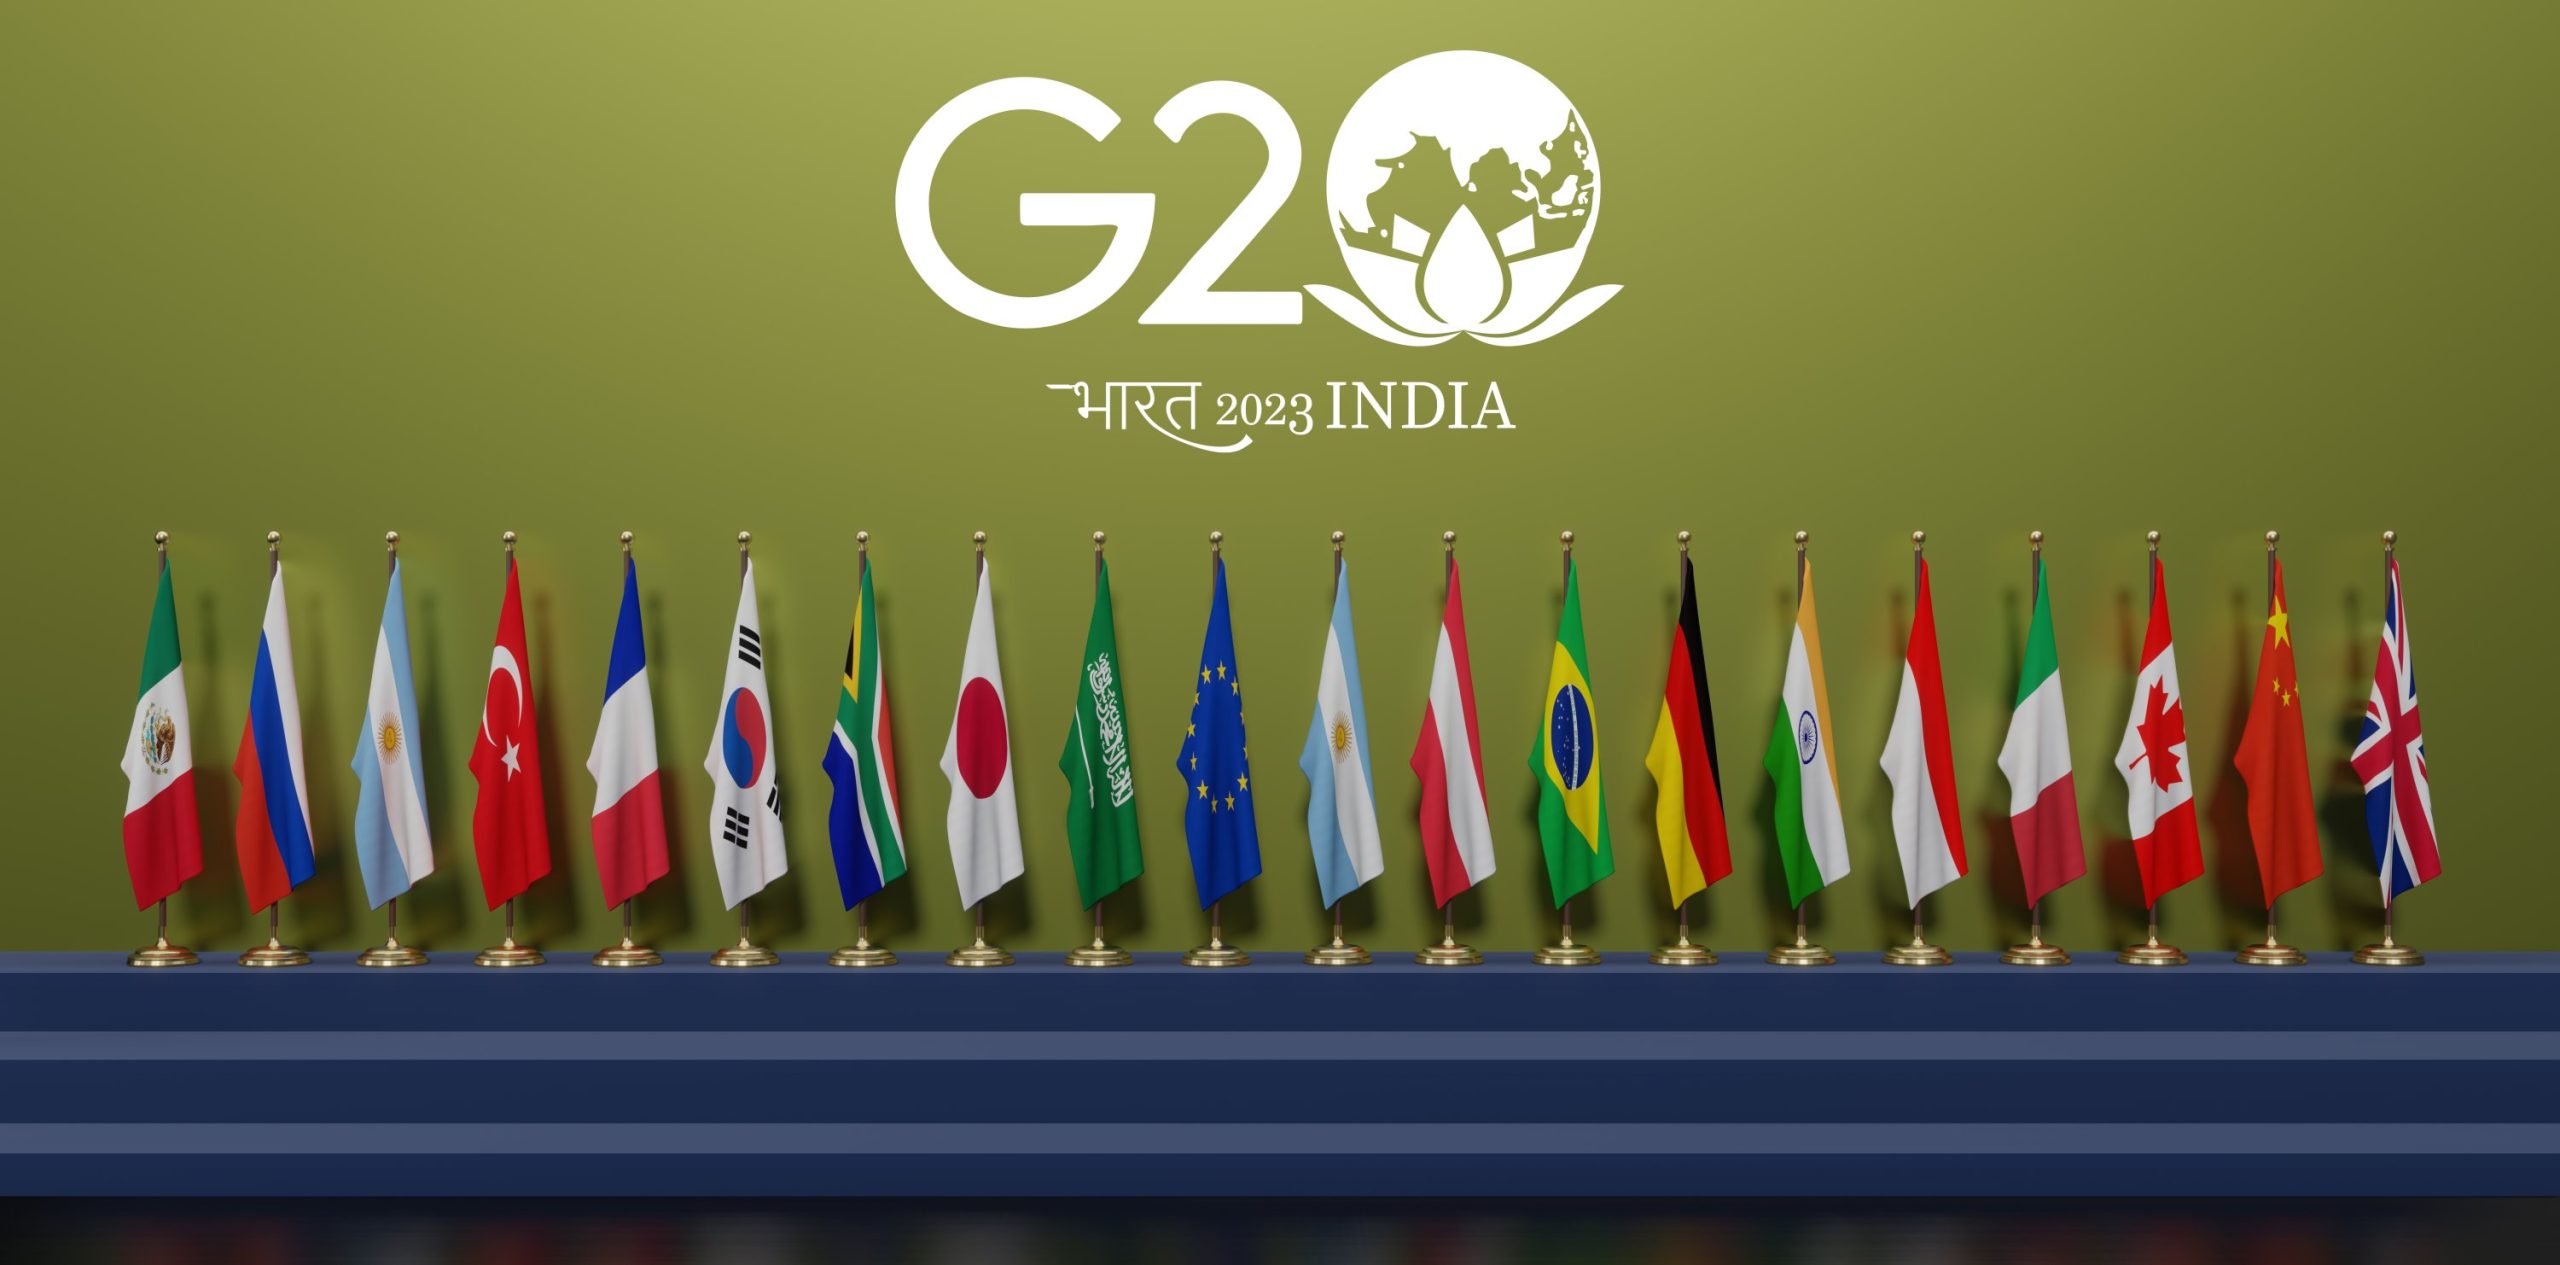 essay on g20 economy and india